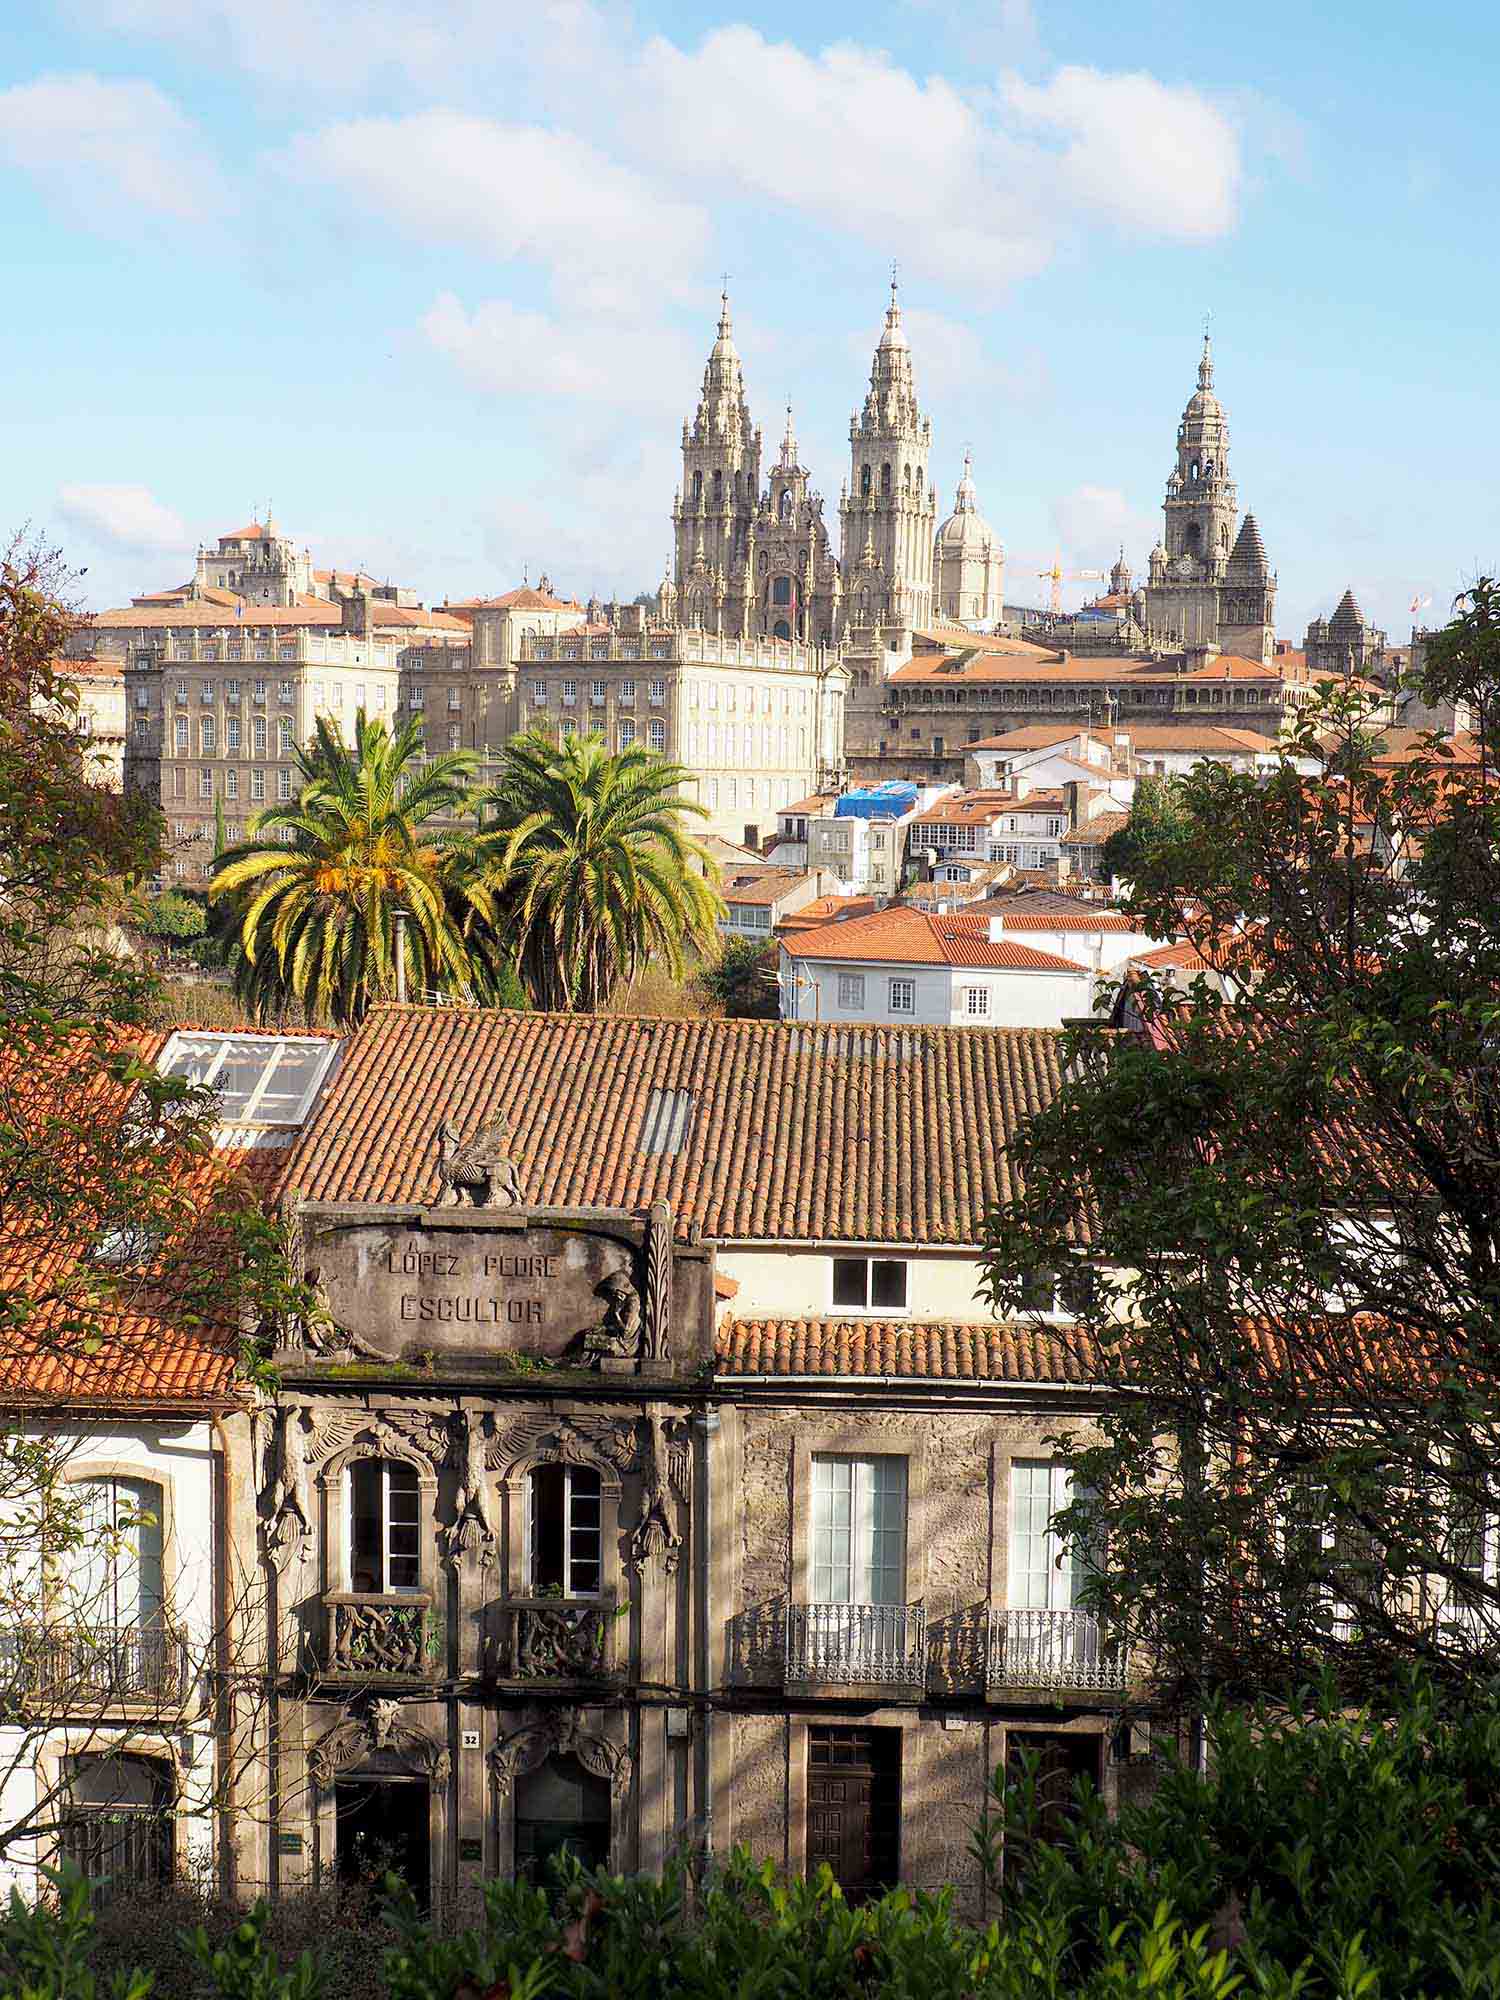 Catedral de Santiago y casa escultor López Pedre. Arquitectura modernista compostelana